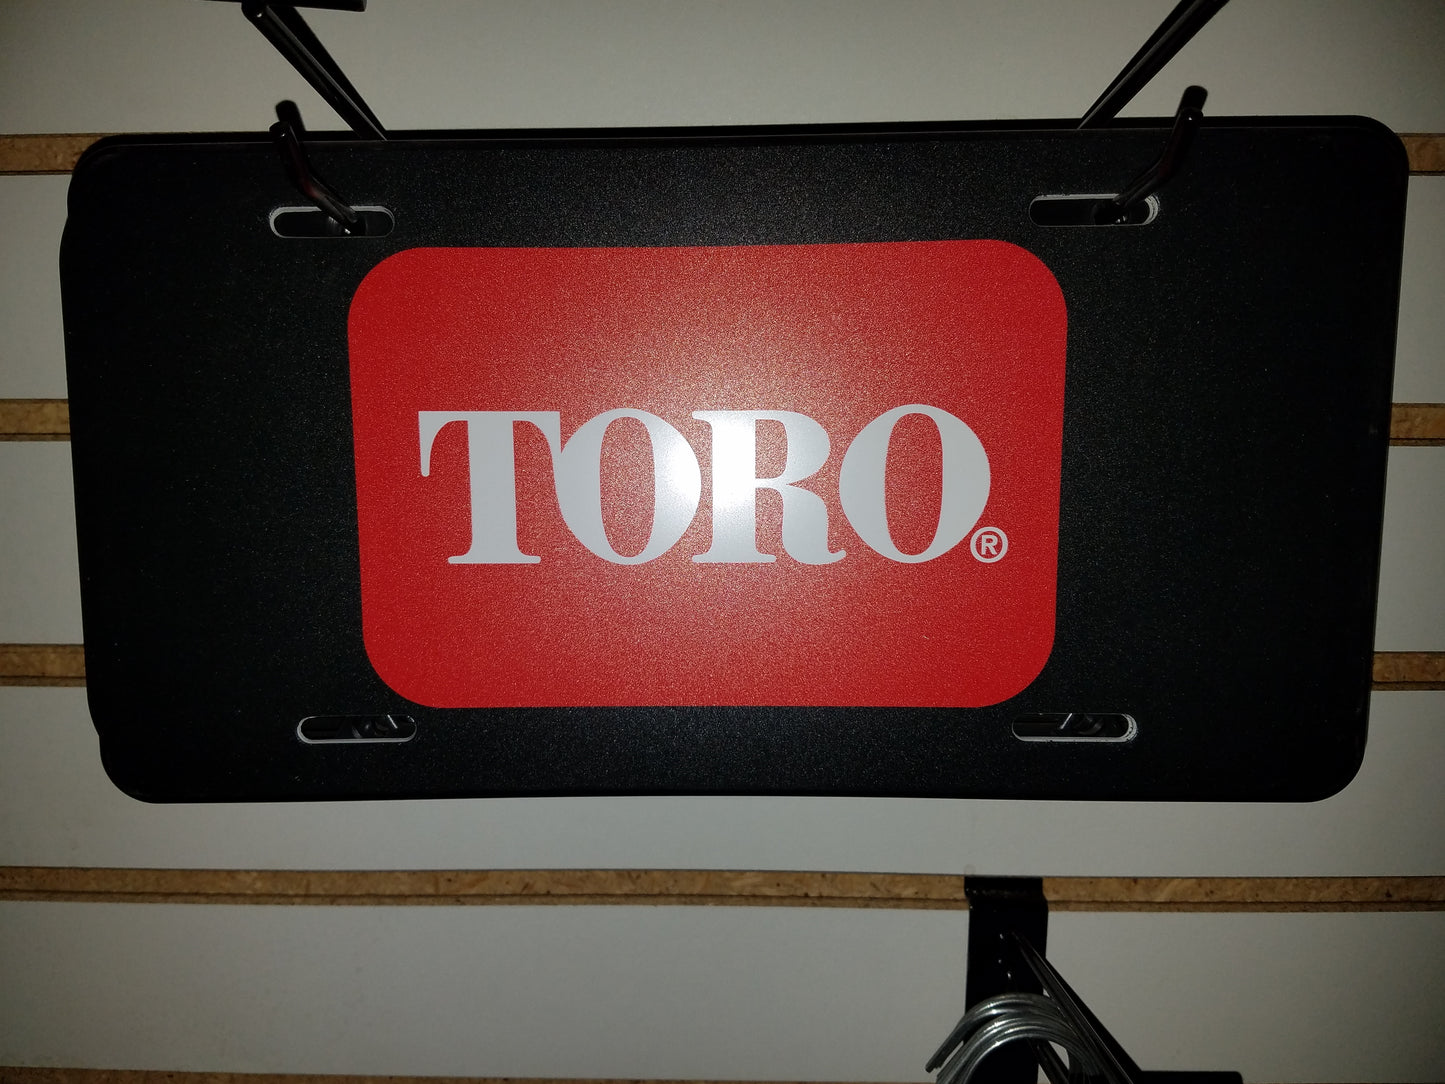 Toro License Plate